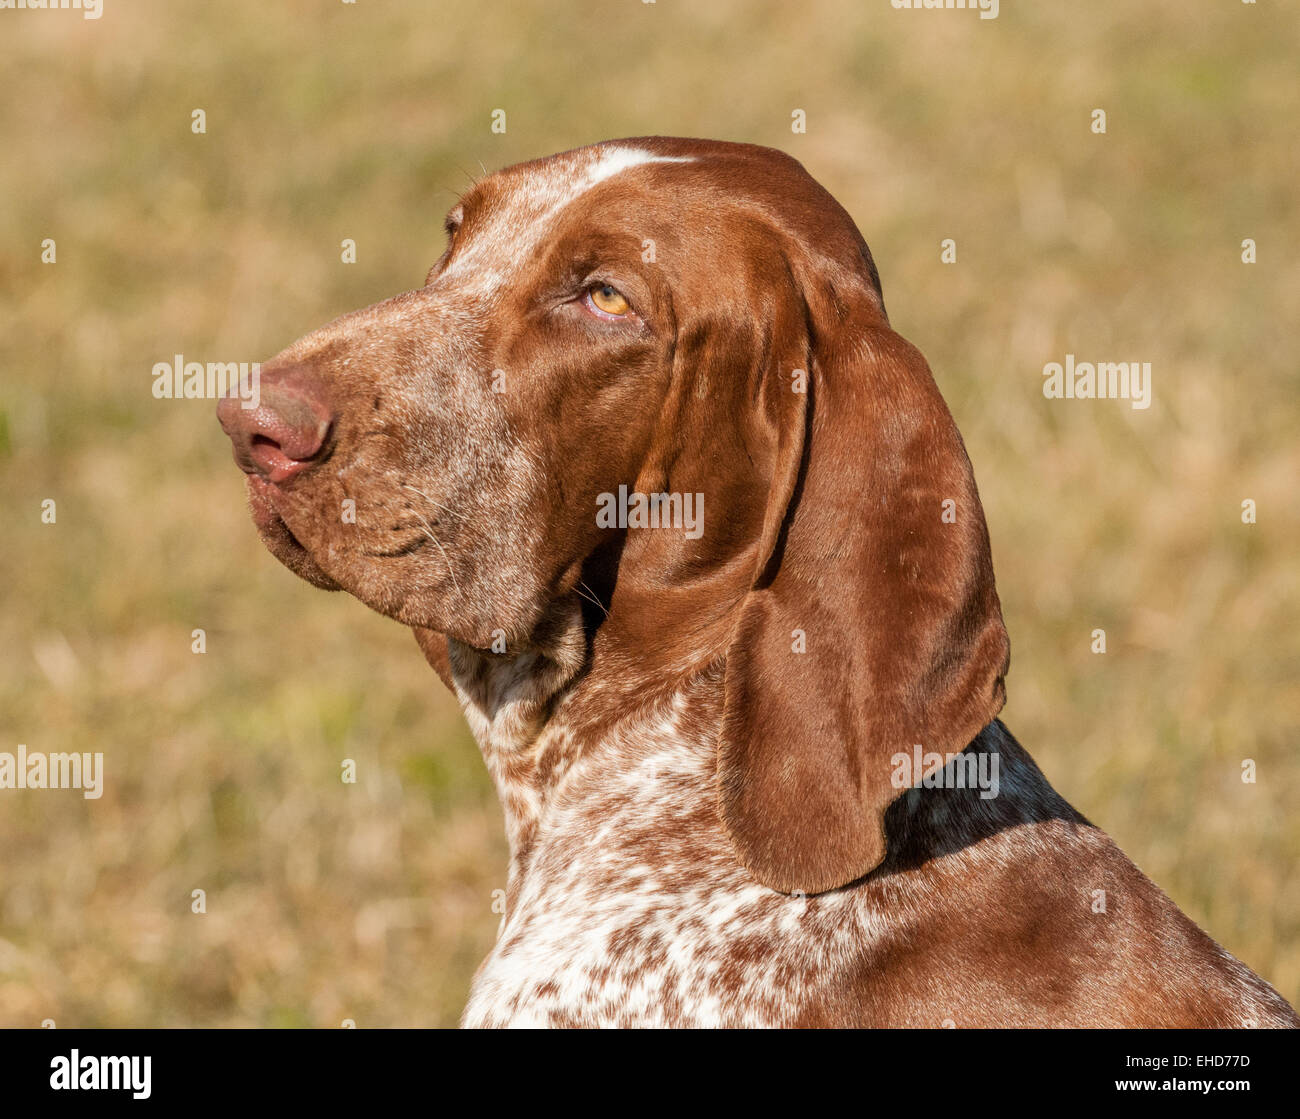 A Bracco Italiano, also called an Italian Pointer or Italian Pointing Dog Stock Photo